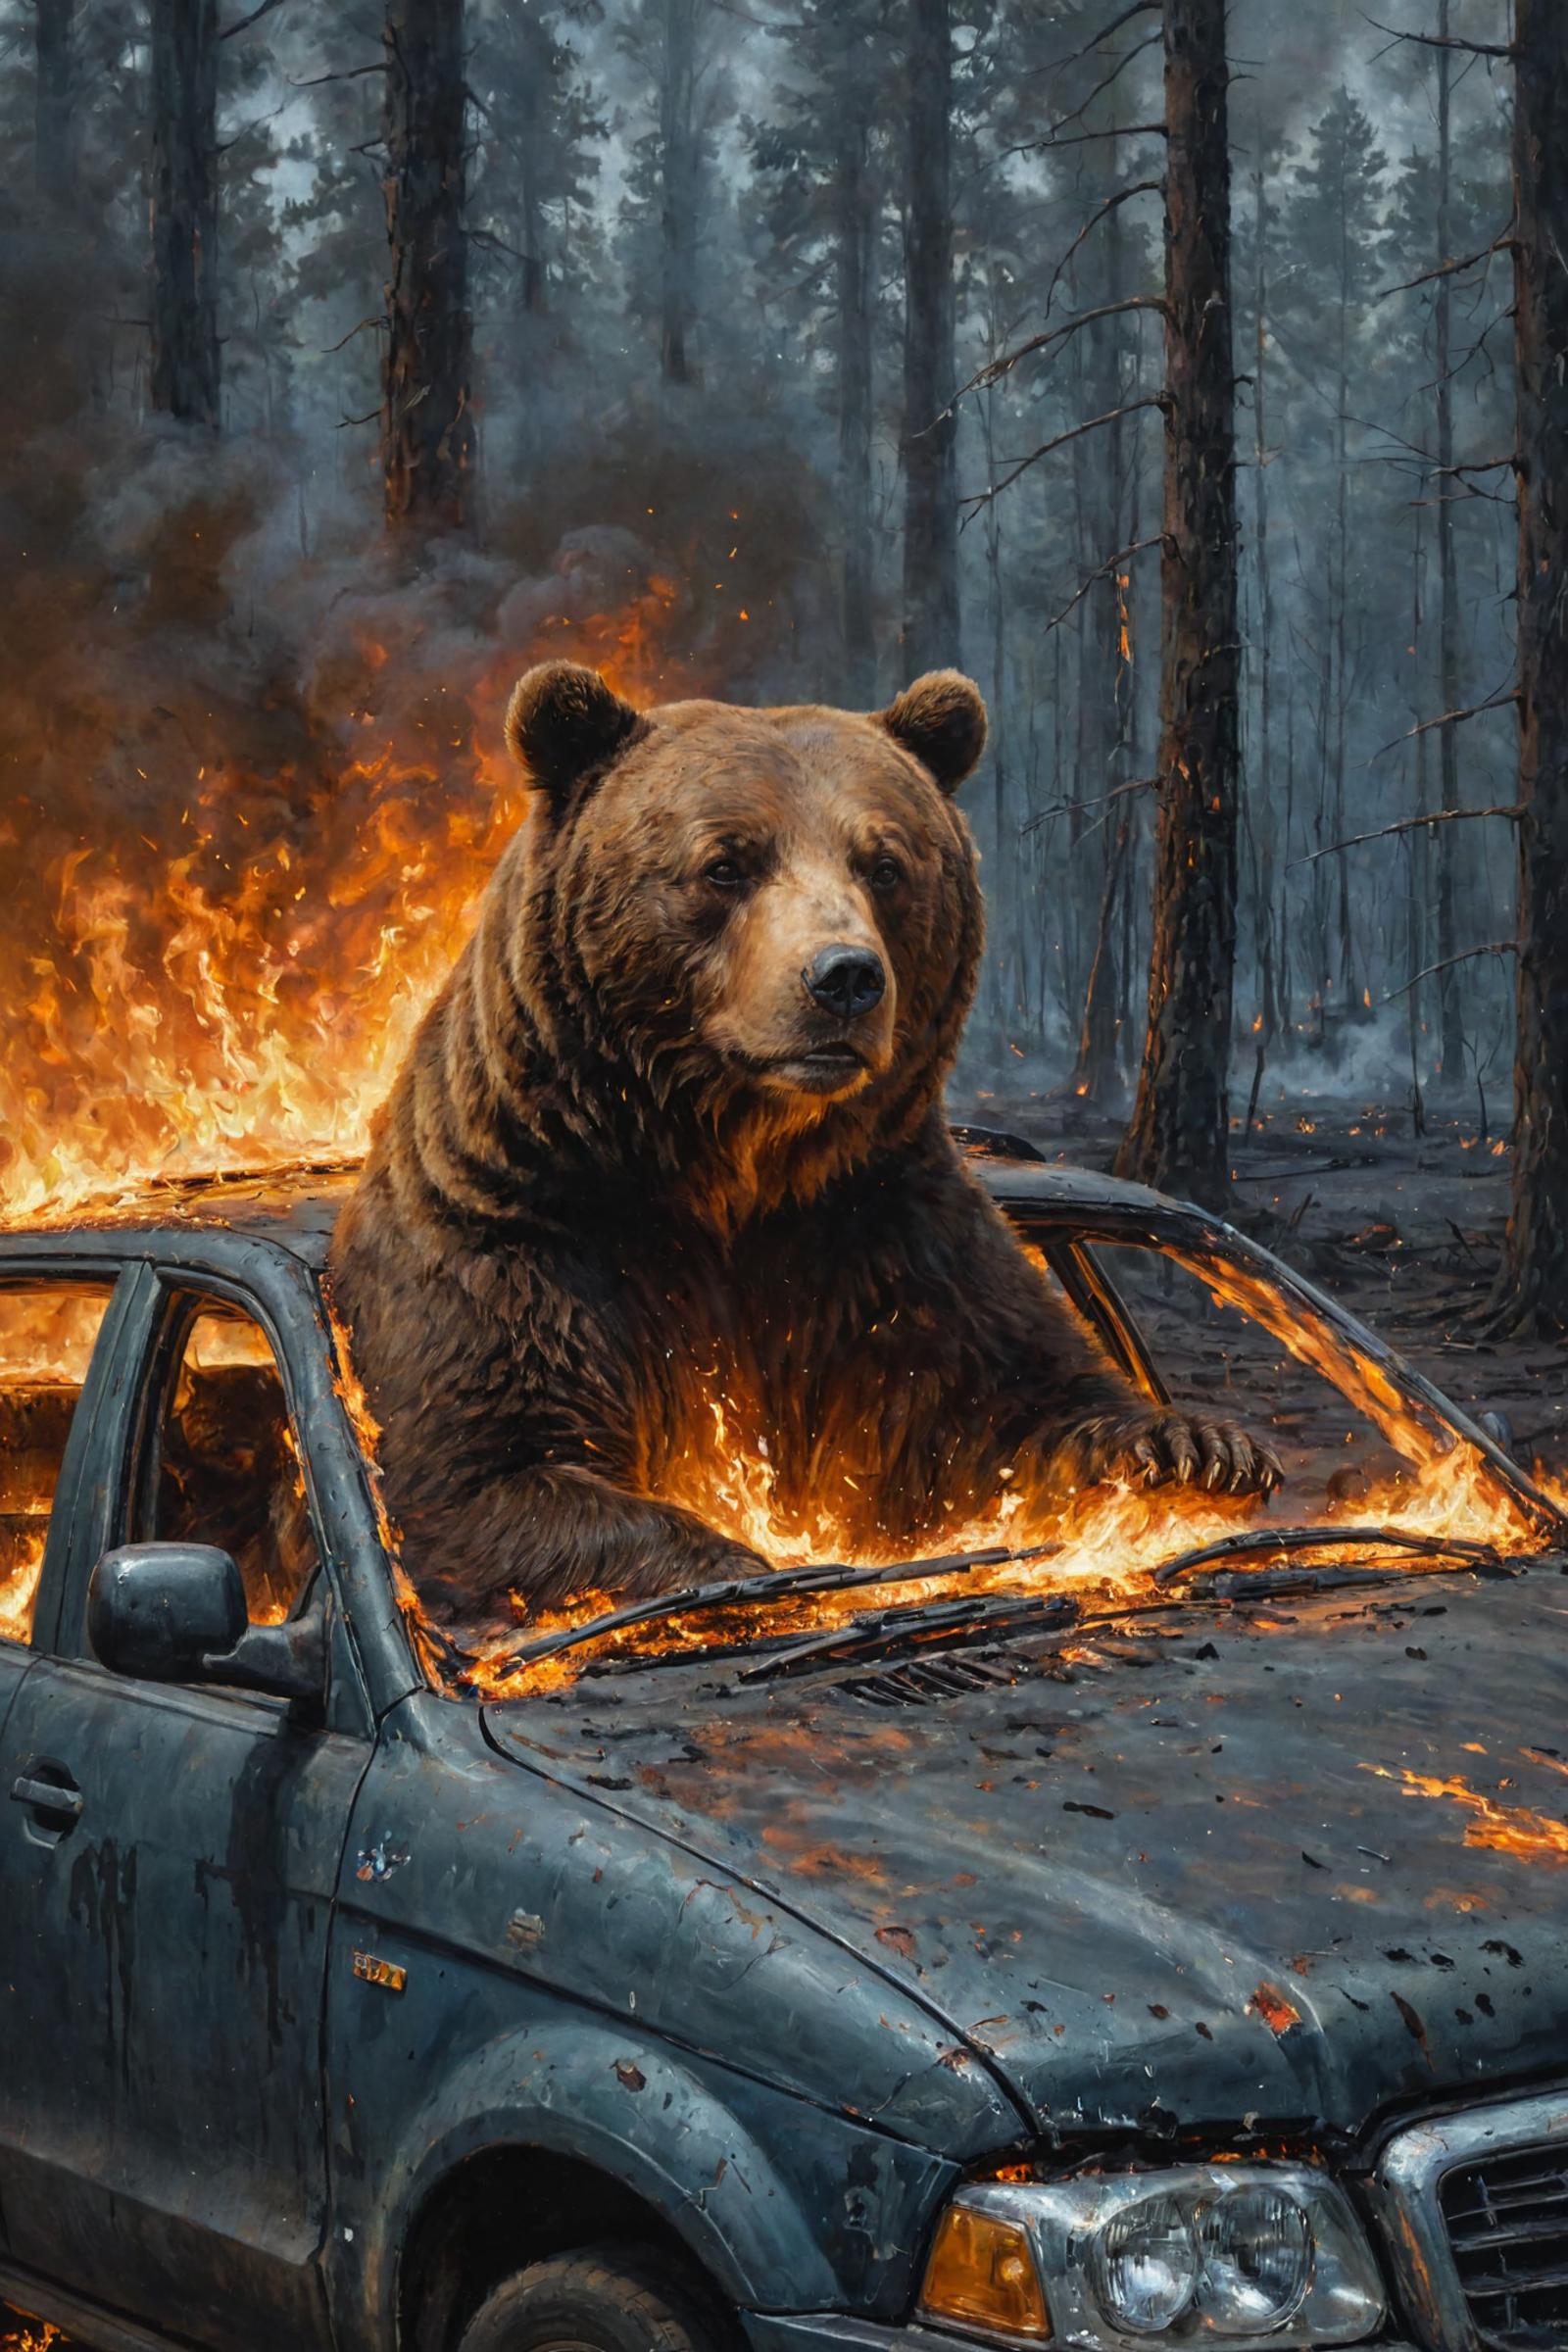 Bear sitting in a burning car.